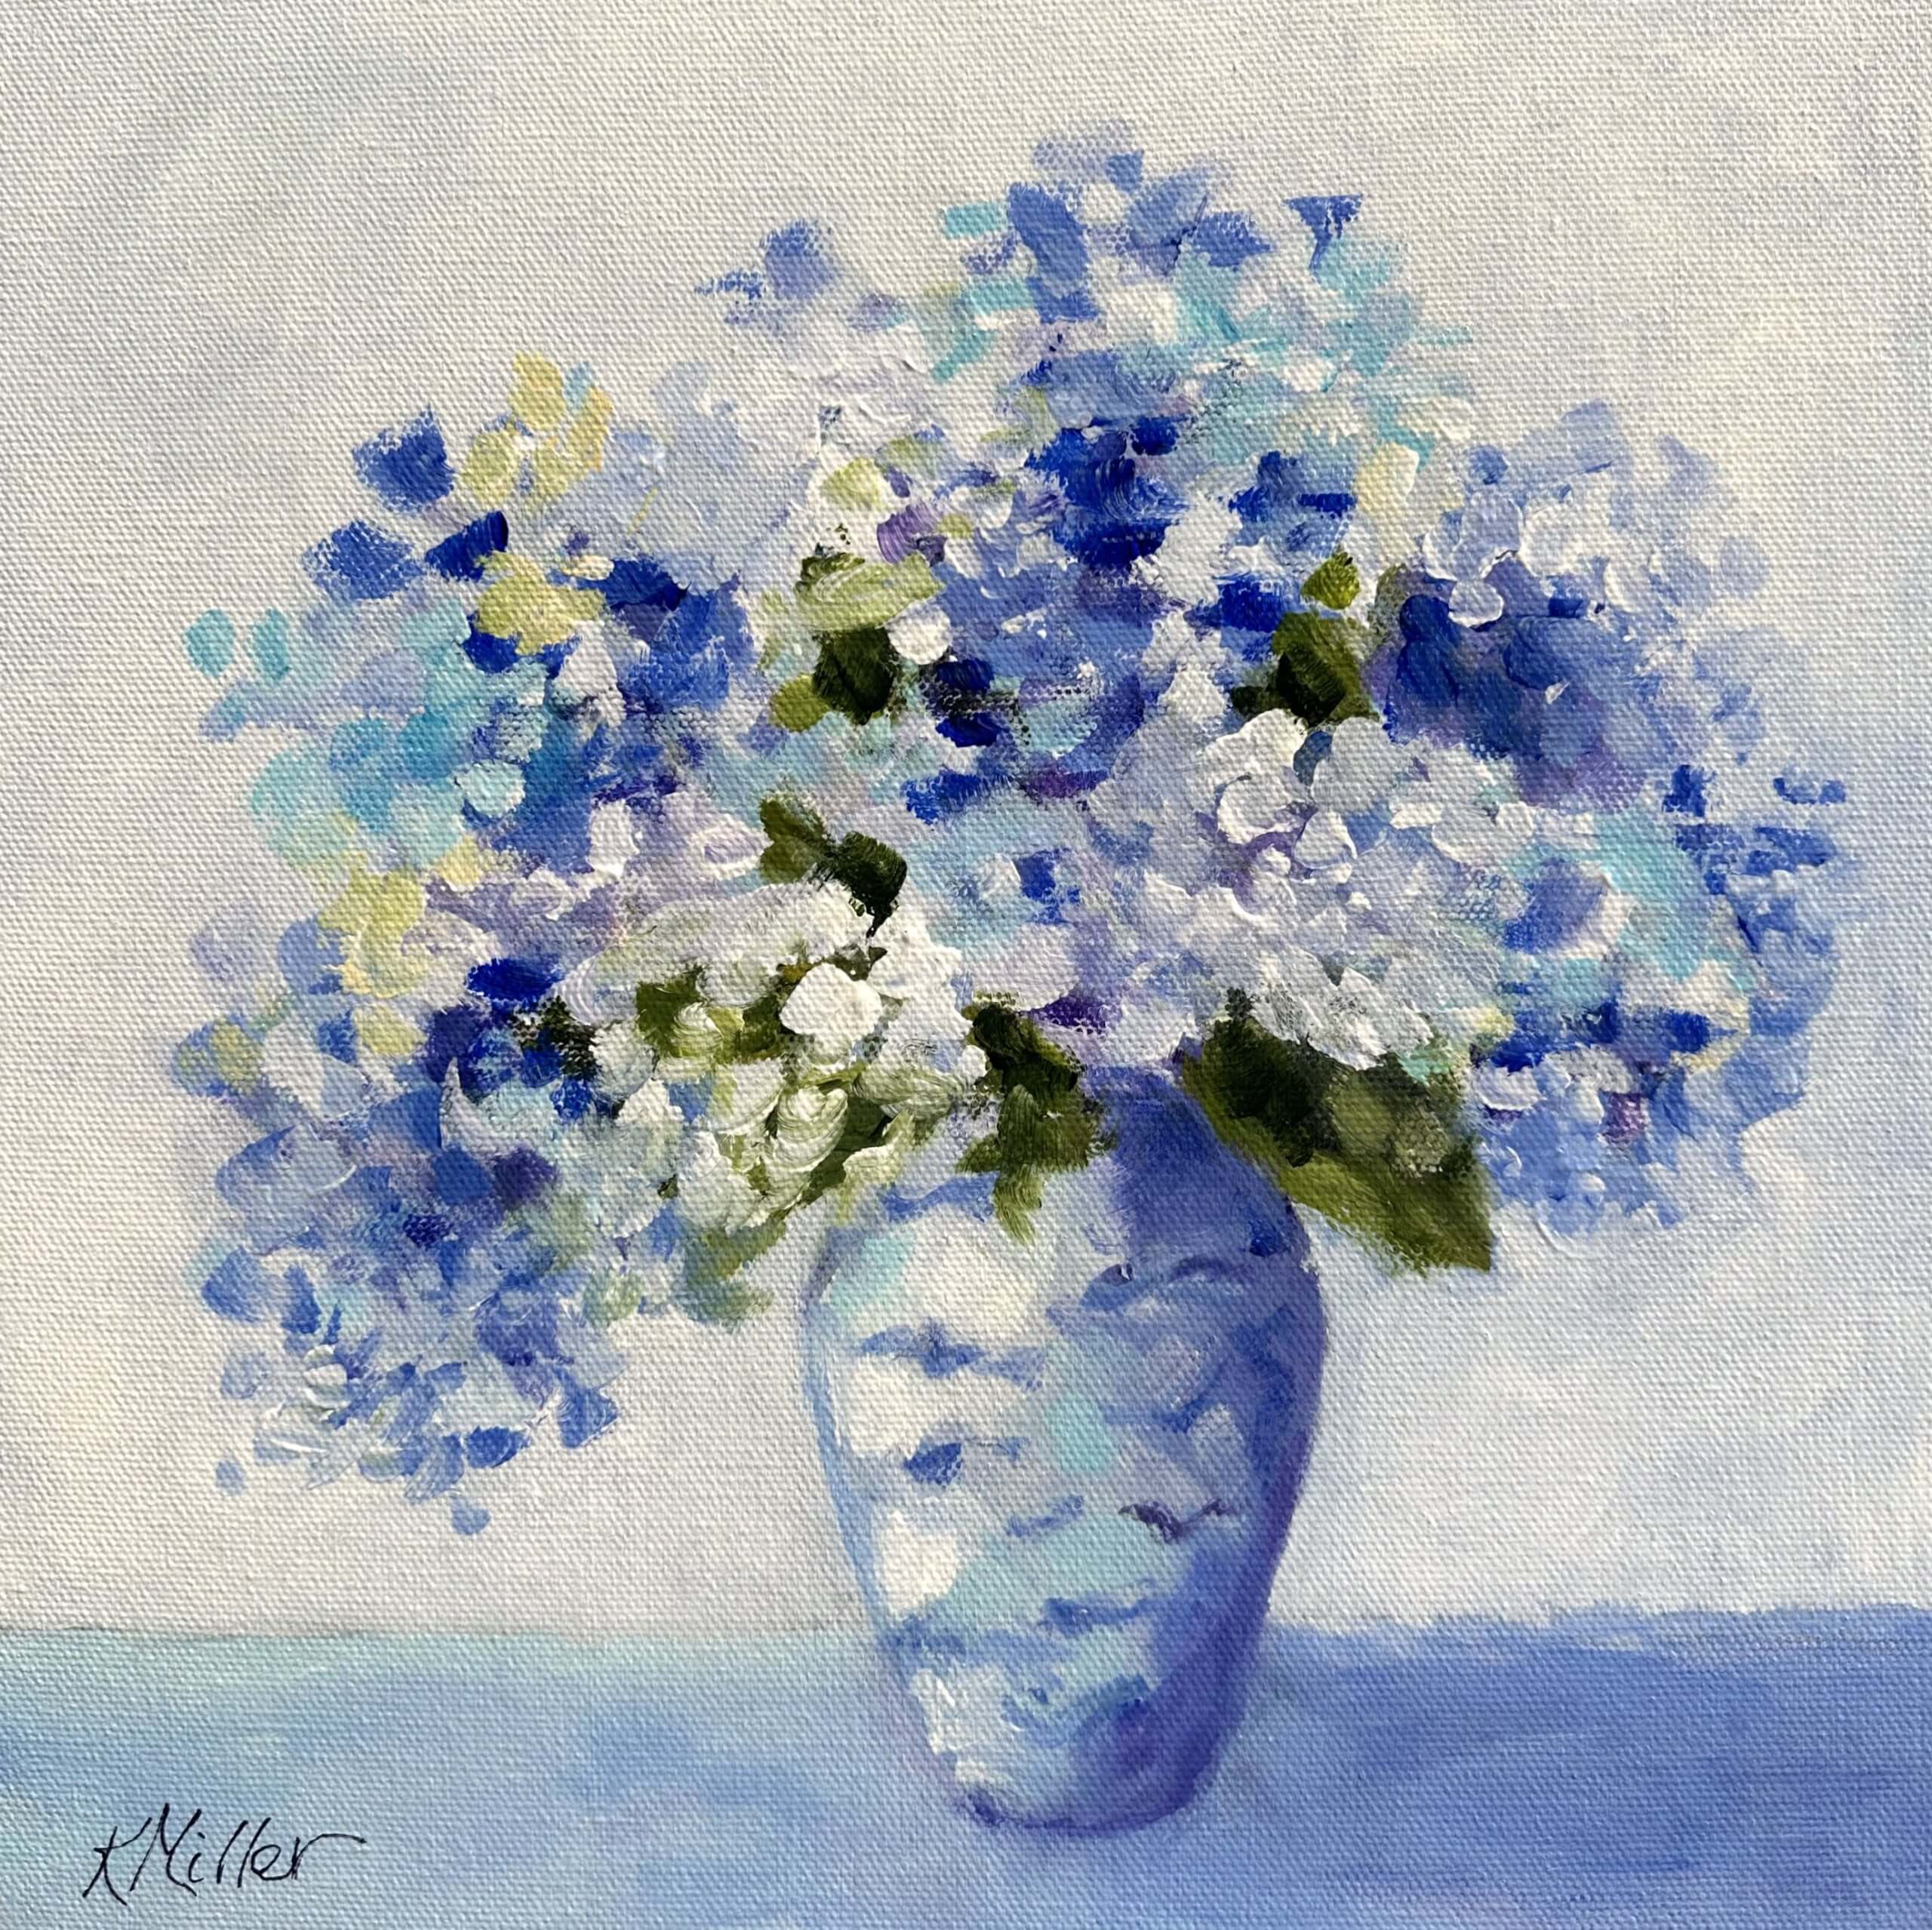 Hydrangea Blues original Acrylic painting by Kathy Miller